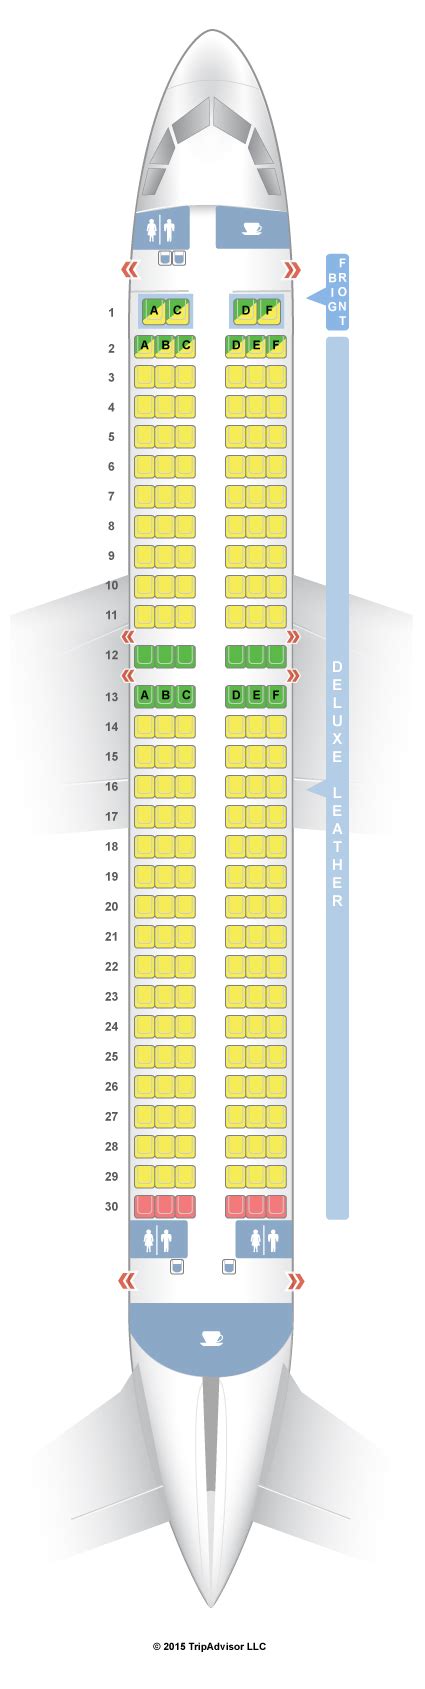 Seating details. Economy. 28-34. 17.75. 174 standard sea